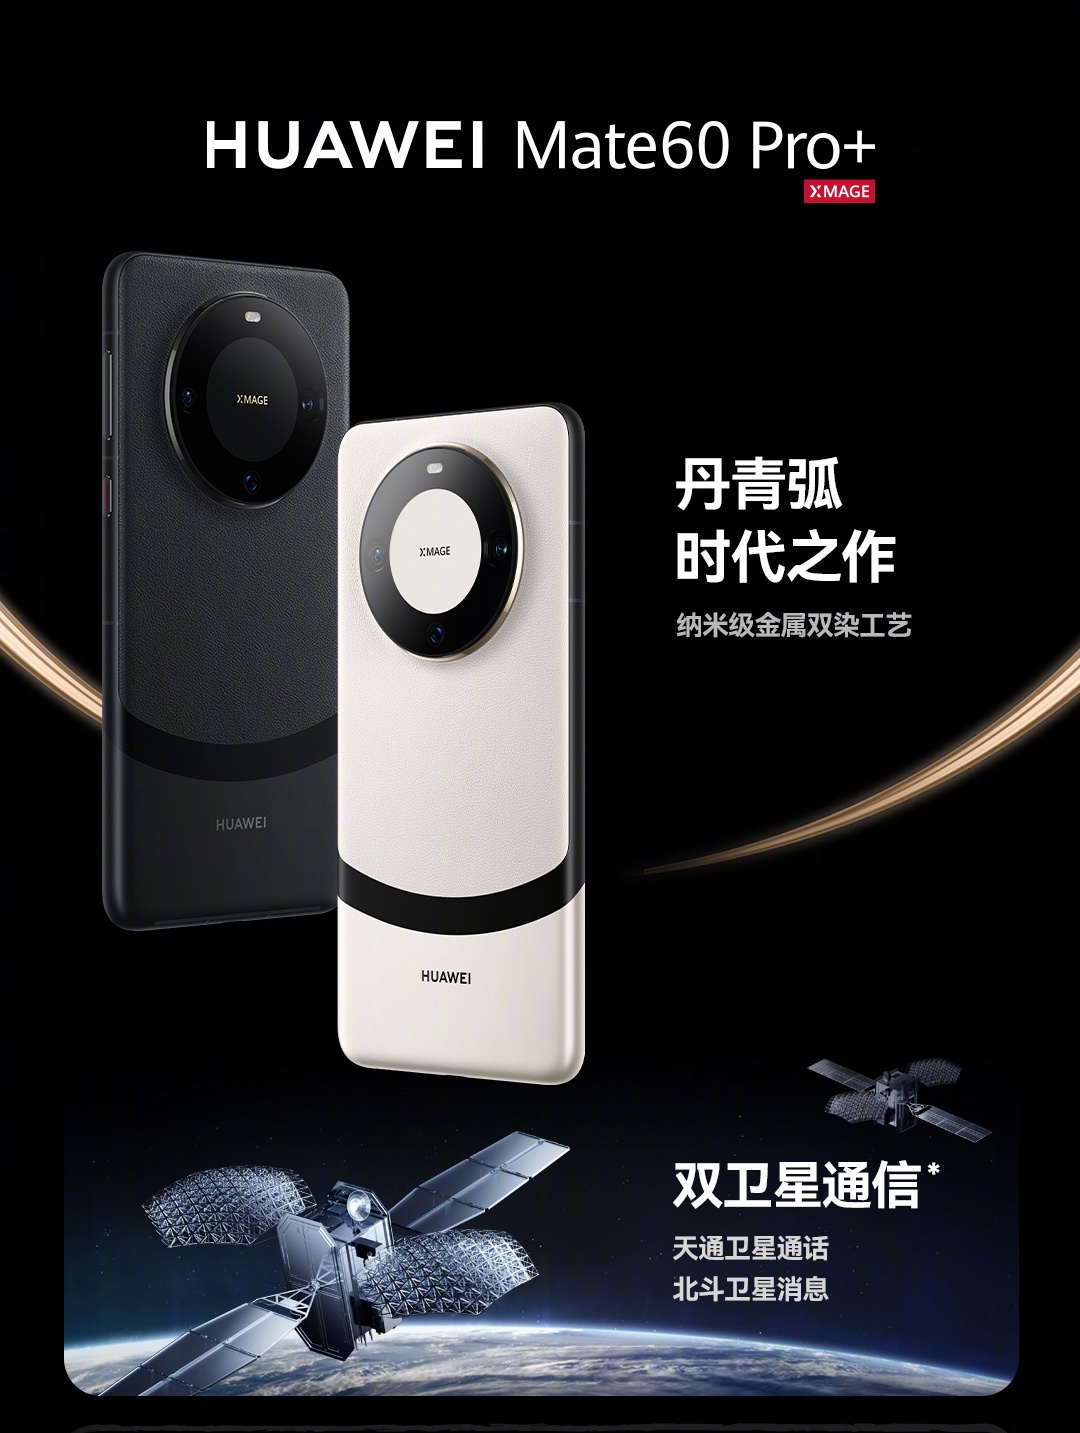 Huawei announces Mate 60 Pro+